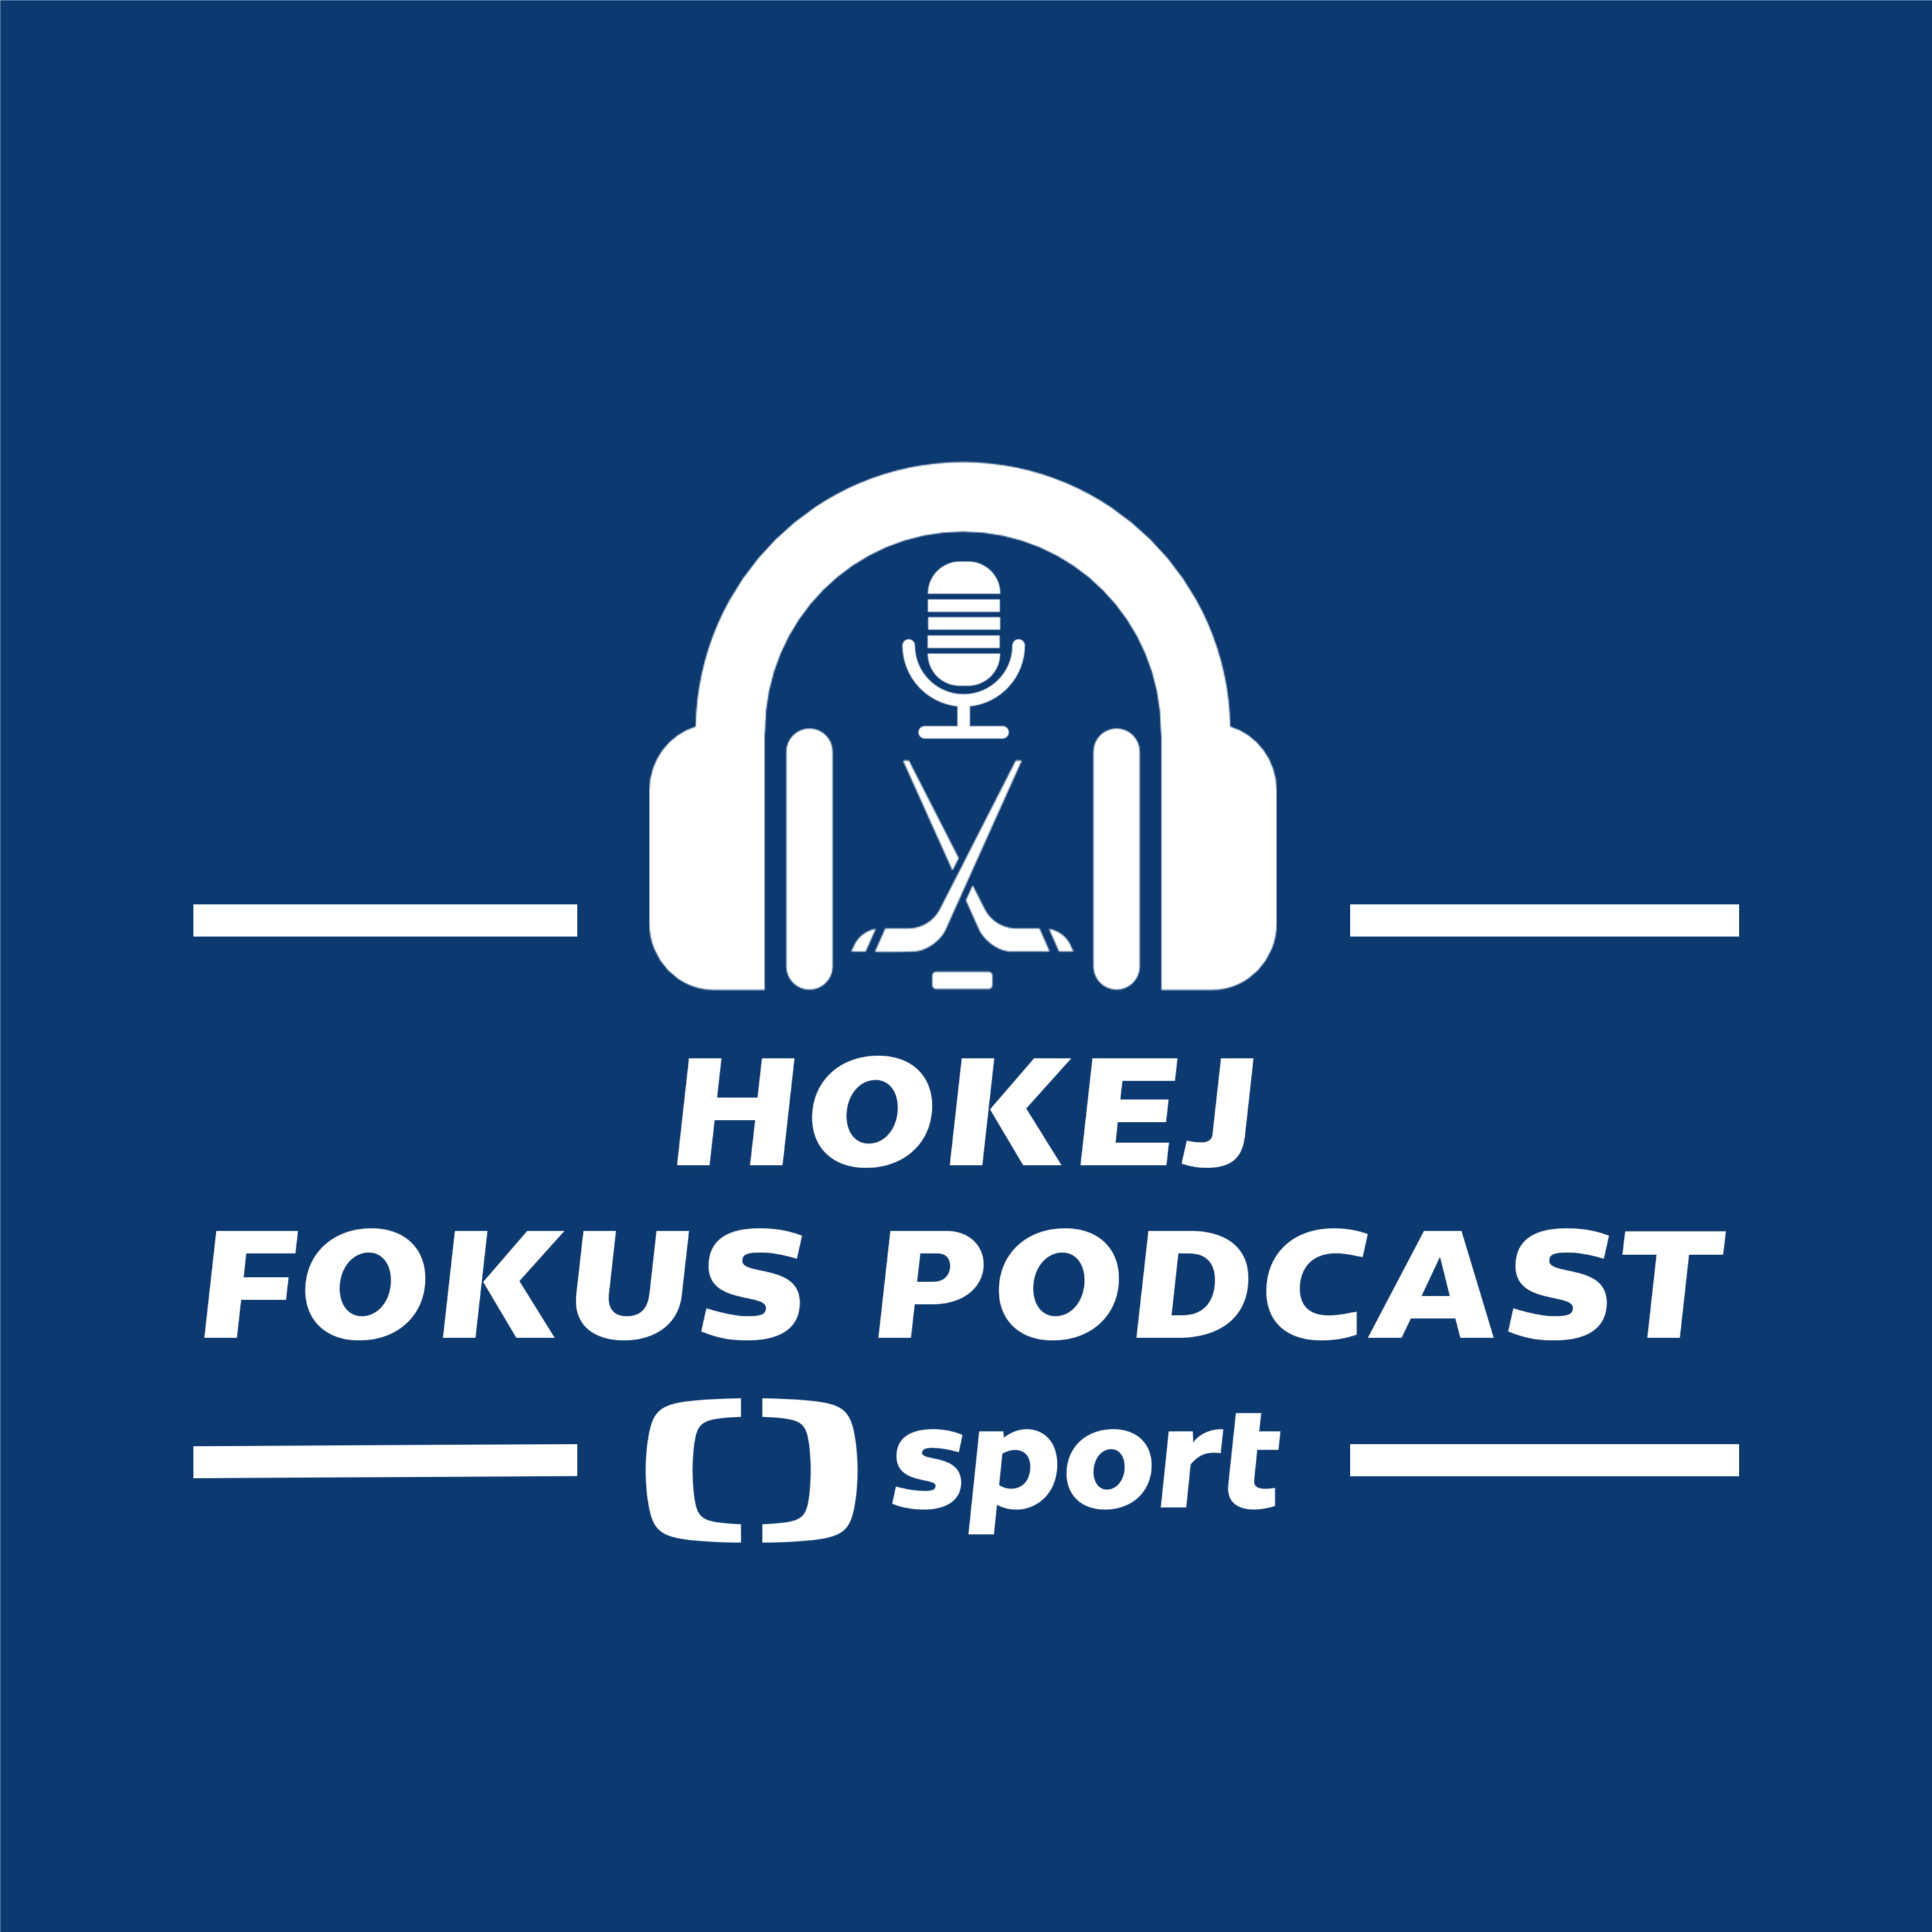 Hokej fokus podcast: Chárův rekord, 500. gól Crosbyho, Marchandův zkrat a St. Louis u Habs